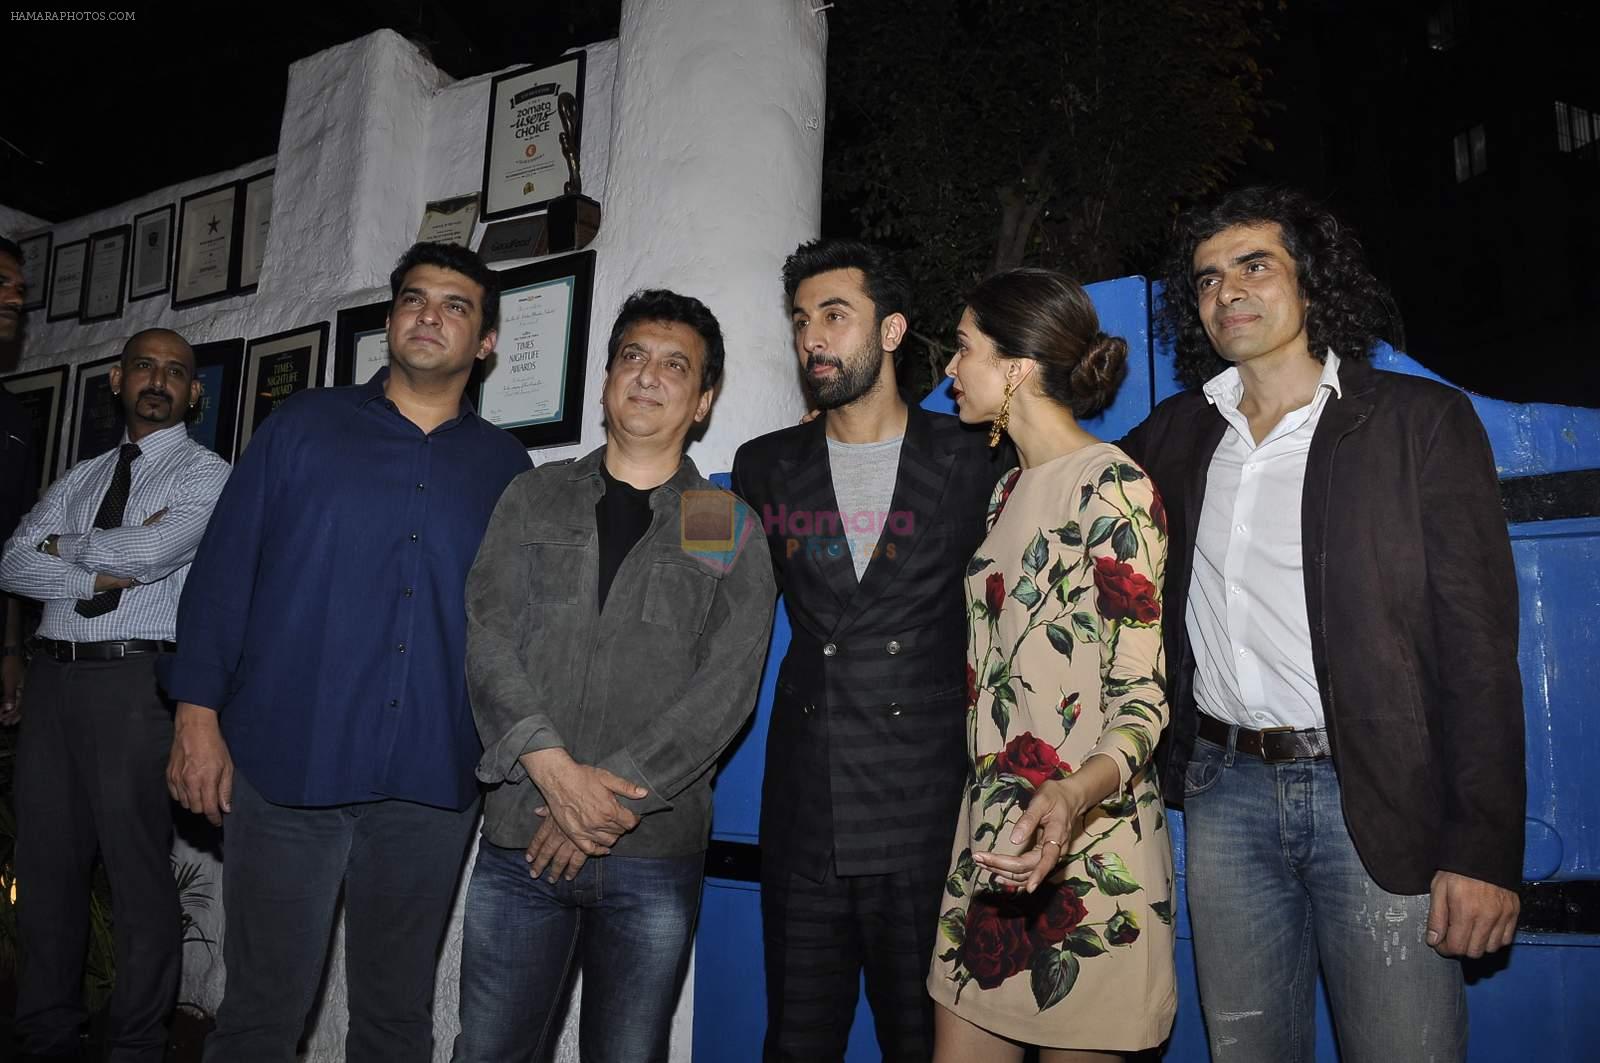 Siddharth Roy Kapur, Sajid Nadiadwala, Ranbir Kapoor, Deepika Padukone, Imtiaz ALi at Tamasha success bash on 30th Nov 2015